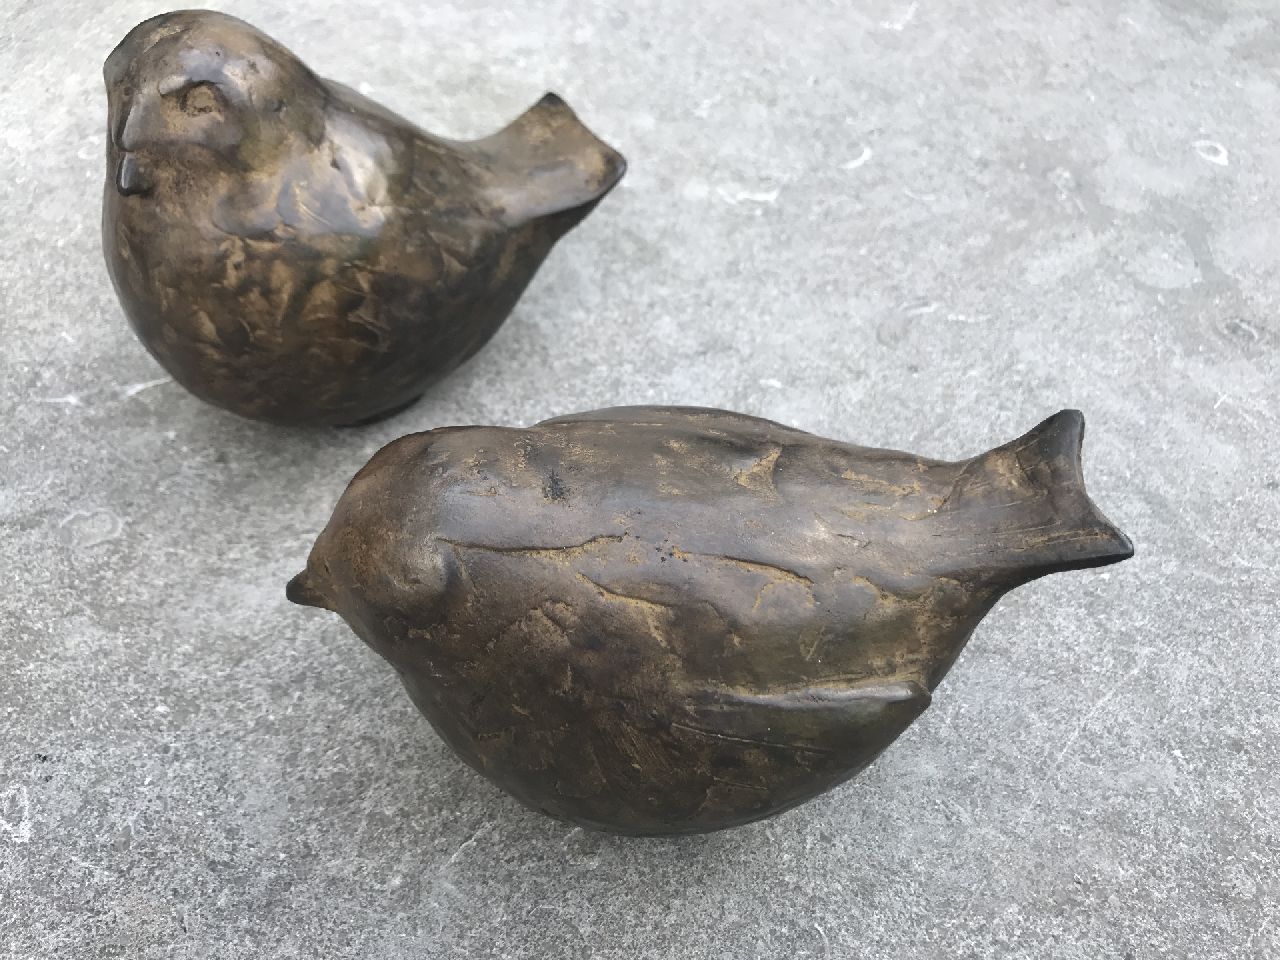 Hemert E. van | Evert van Hemert, Love birds (2), patinated bronze 13.5 x 14.5 cm, signed with monogram under the tail and executed in 2013